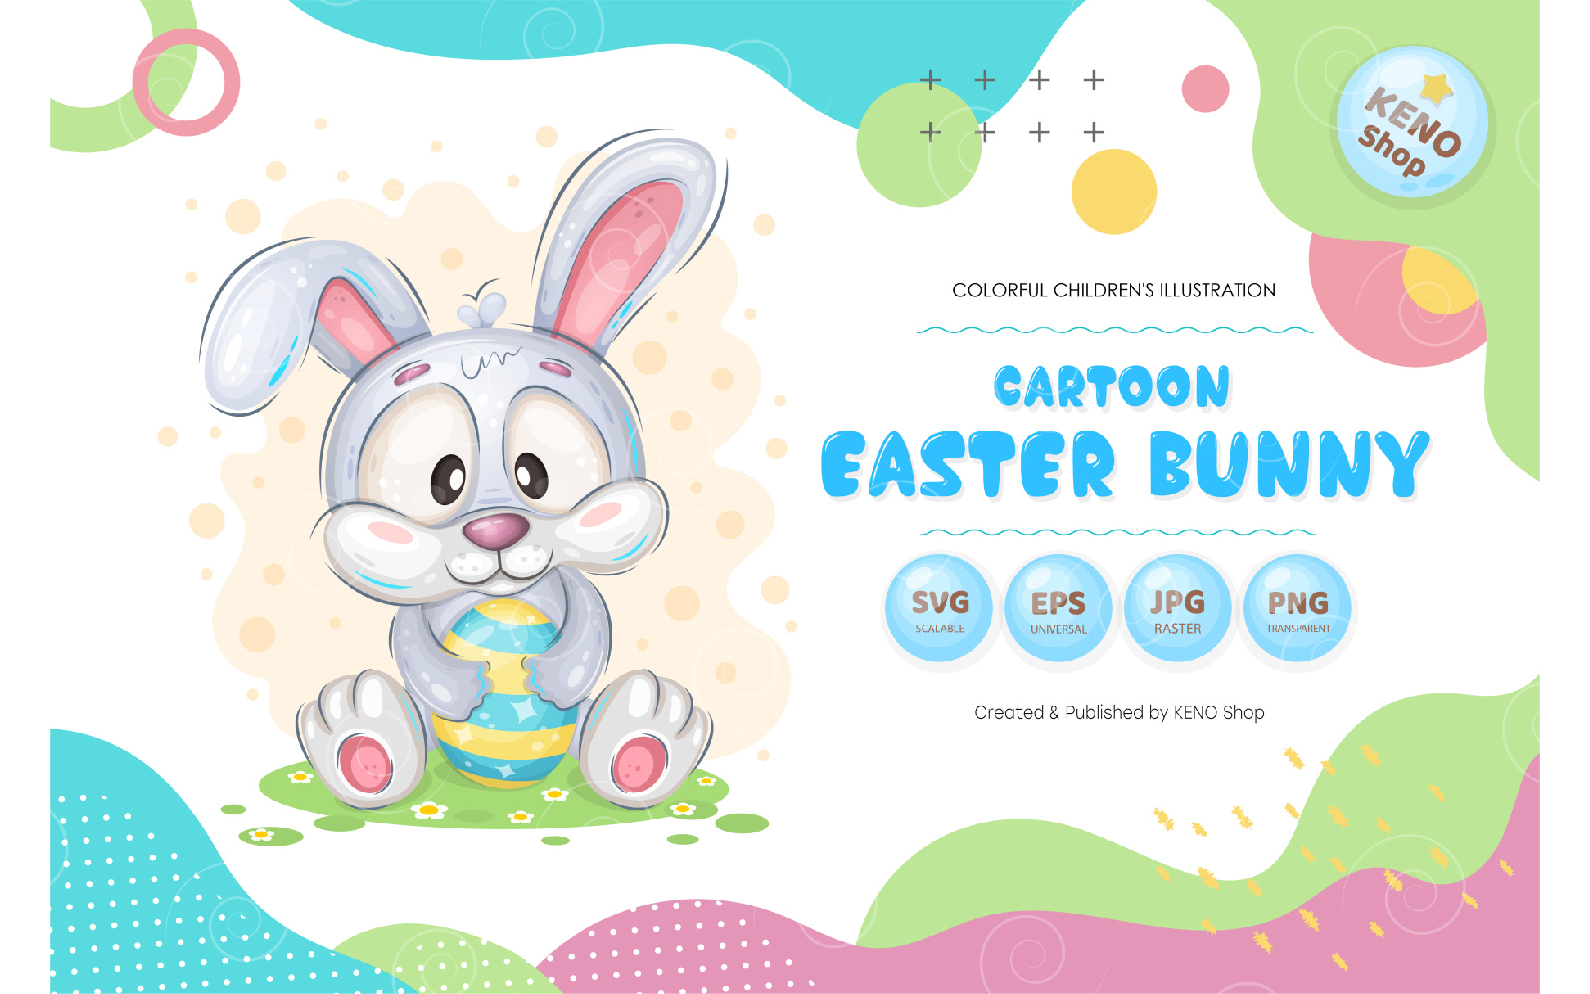 Cartoon Easter Bunny - Vector Image